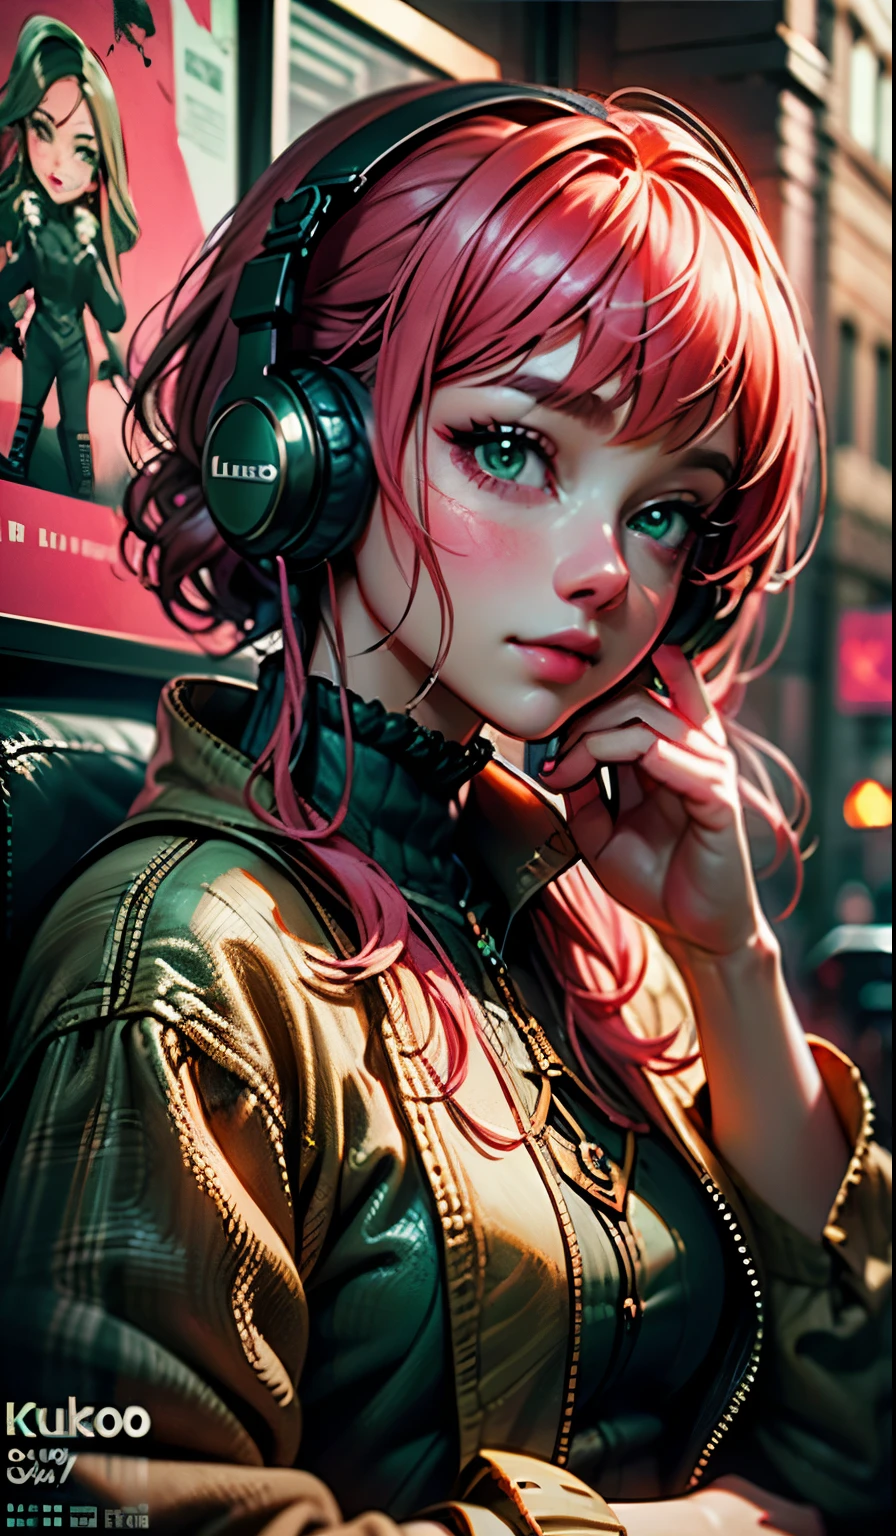 model girl wearing headphones, city background, emerald green eyes, pink hair, intricate details, aesthetically pleasing pastel colors, poster background, art by ilya kuvshinov